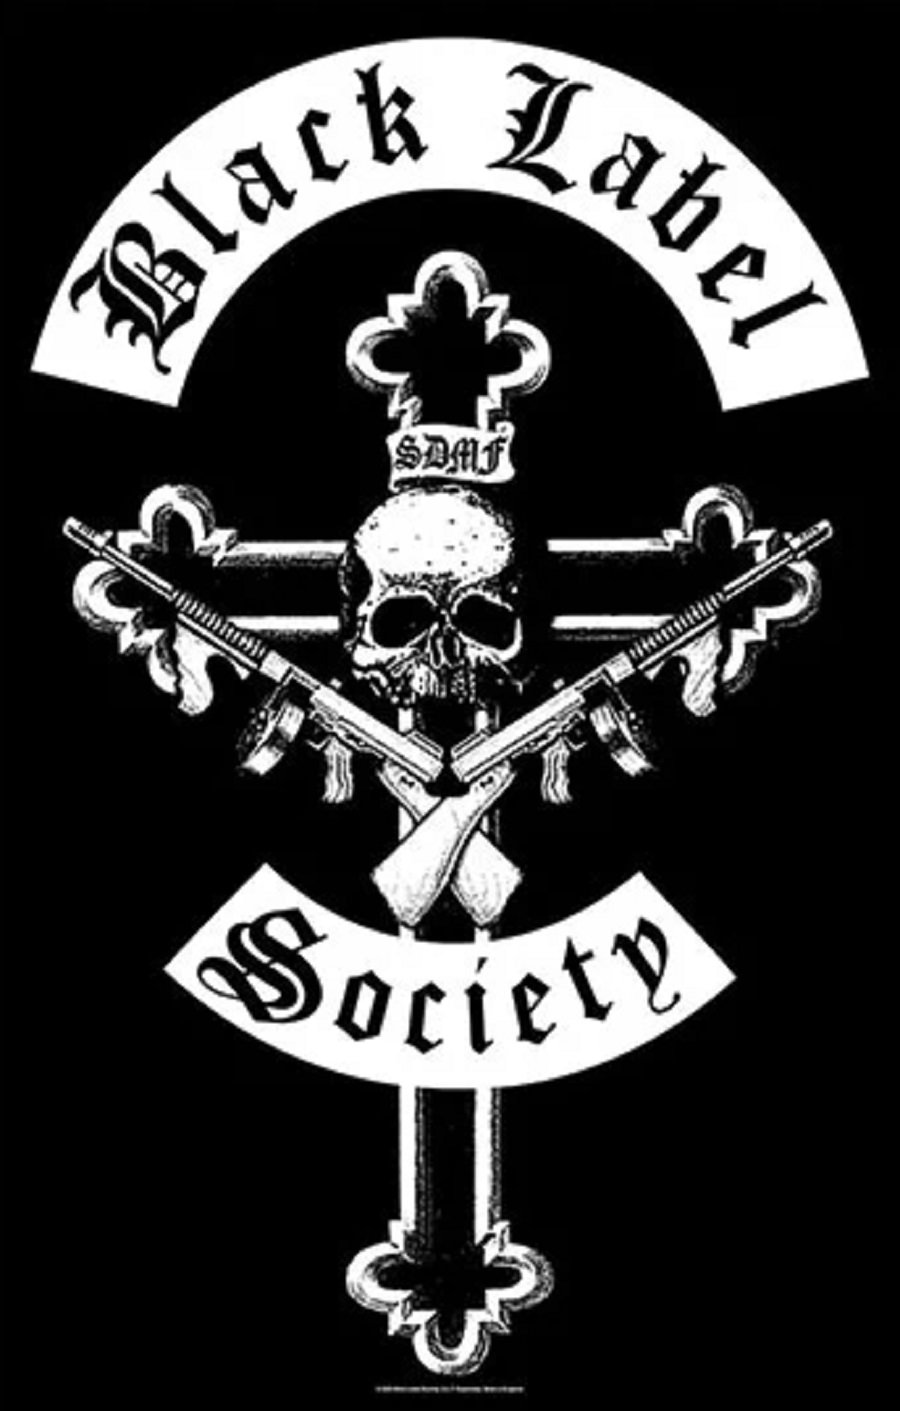 Black Label Society Merch